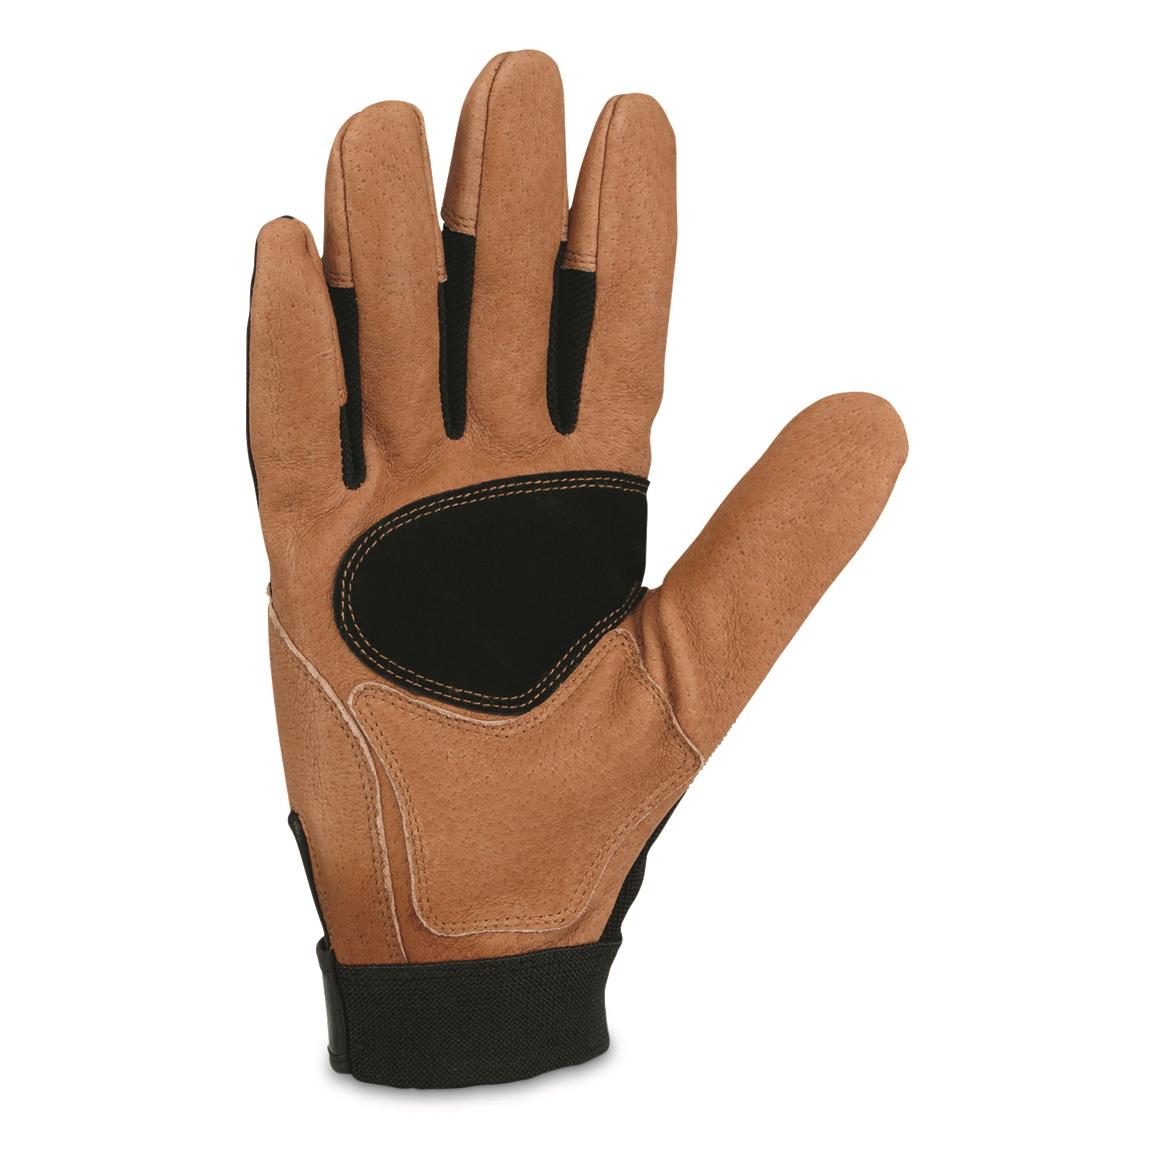 Glacier Glove Guide Gloves - 733881, Gloves & Mittens at Sportsman's Guide